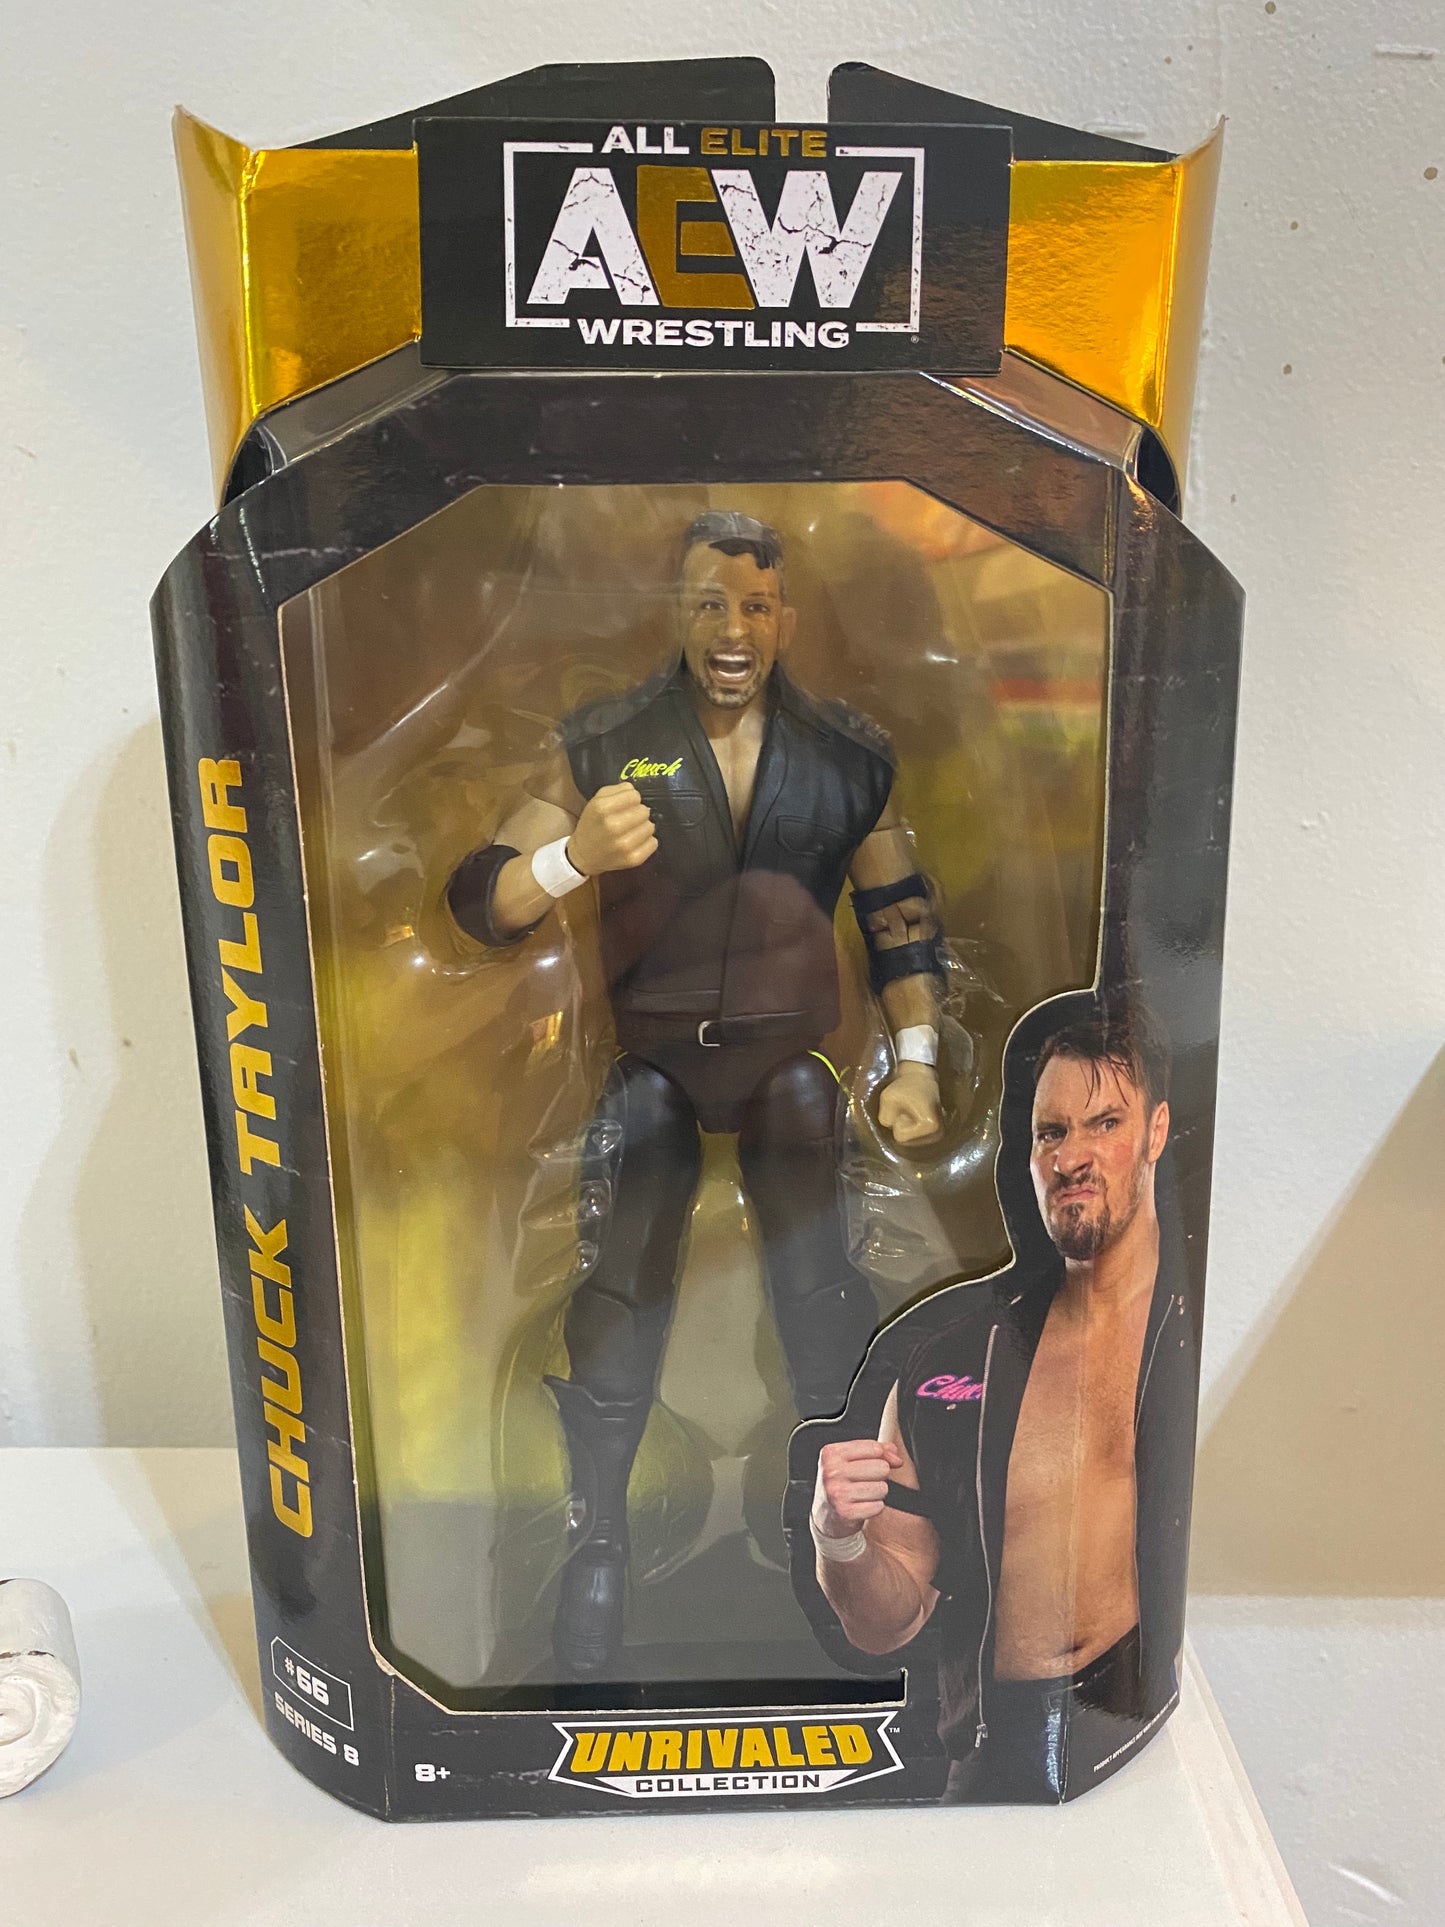 AEW Wrestling Figurines